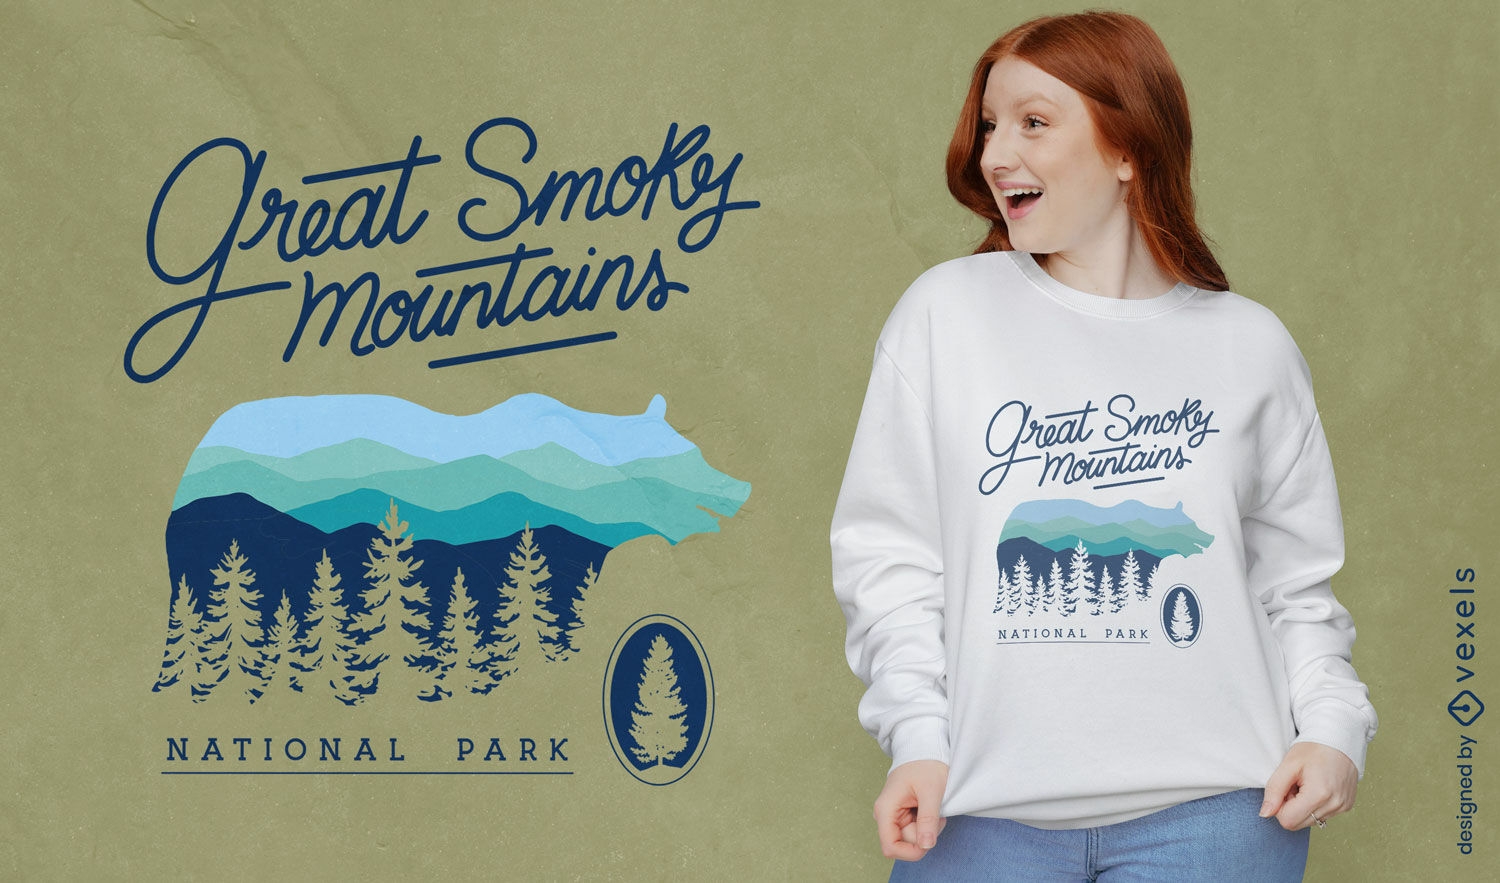 Great smoky mountains national park t-shirt design